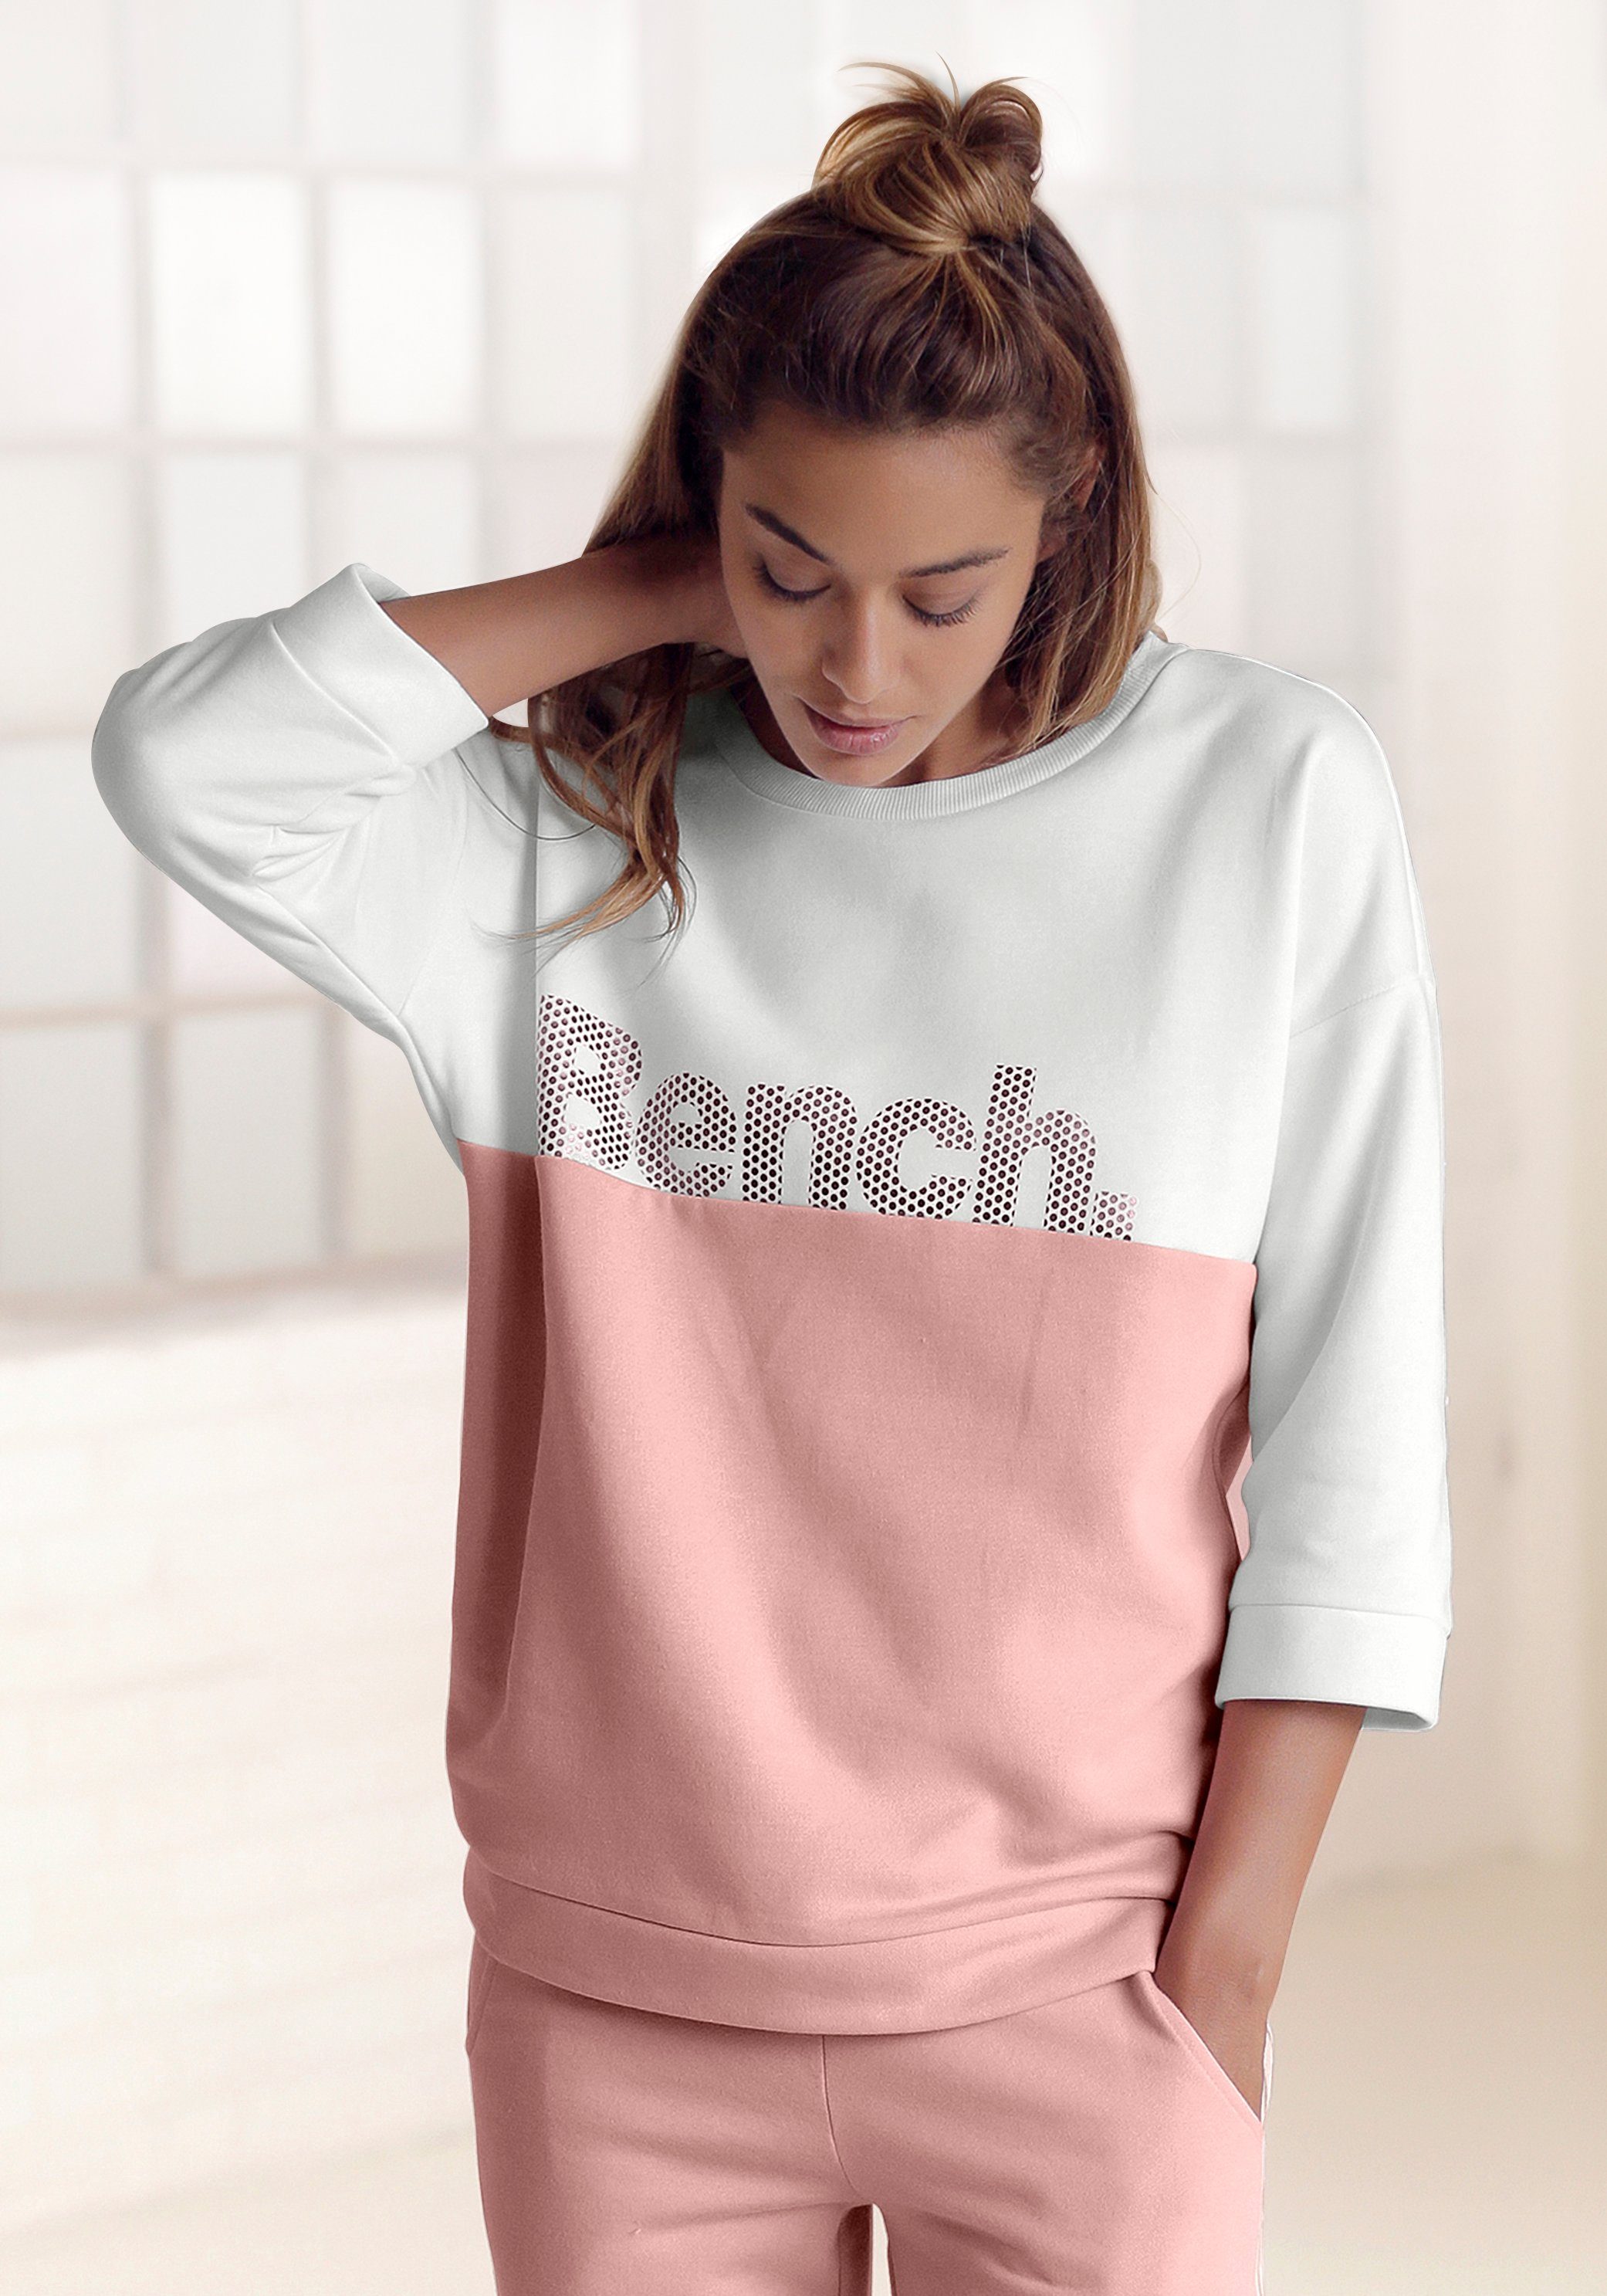 Bench. Sweatshirt im Colorblocking Design, Loungewear, Loungeanzug